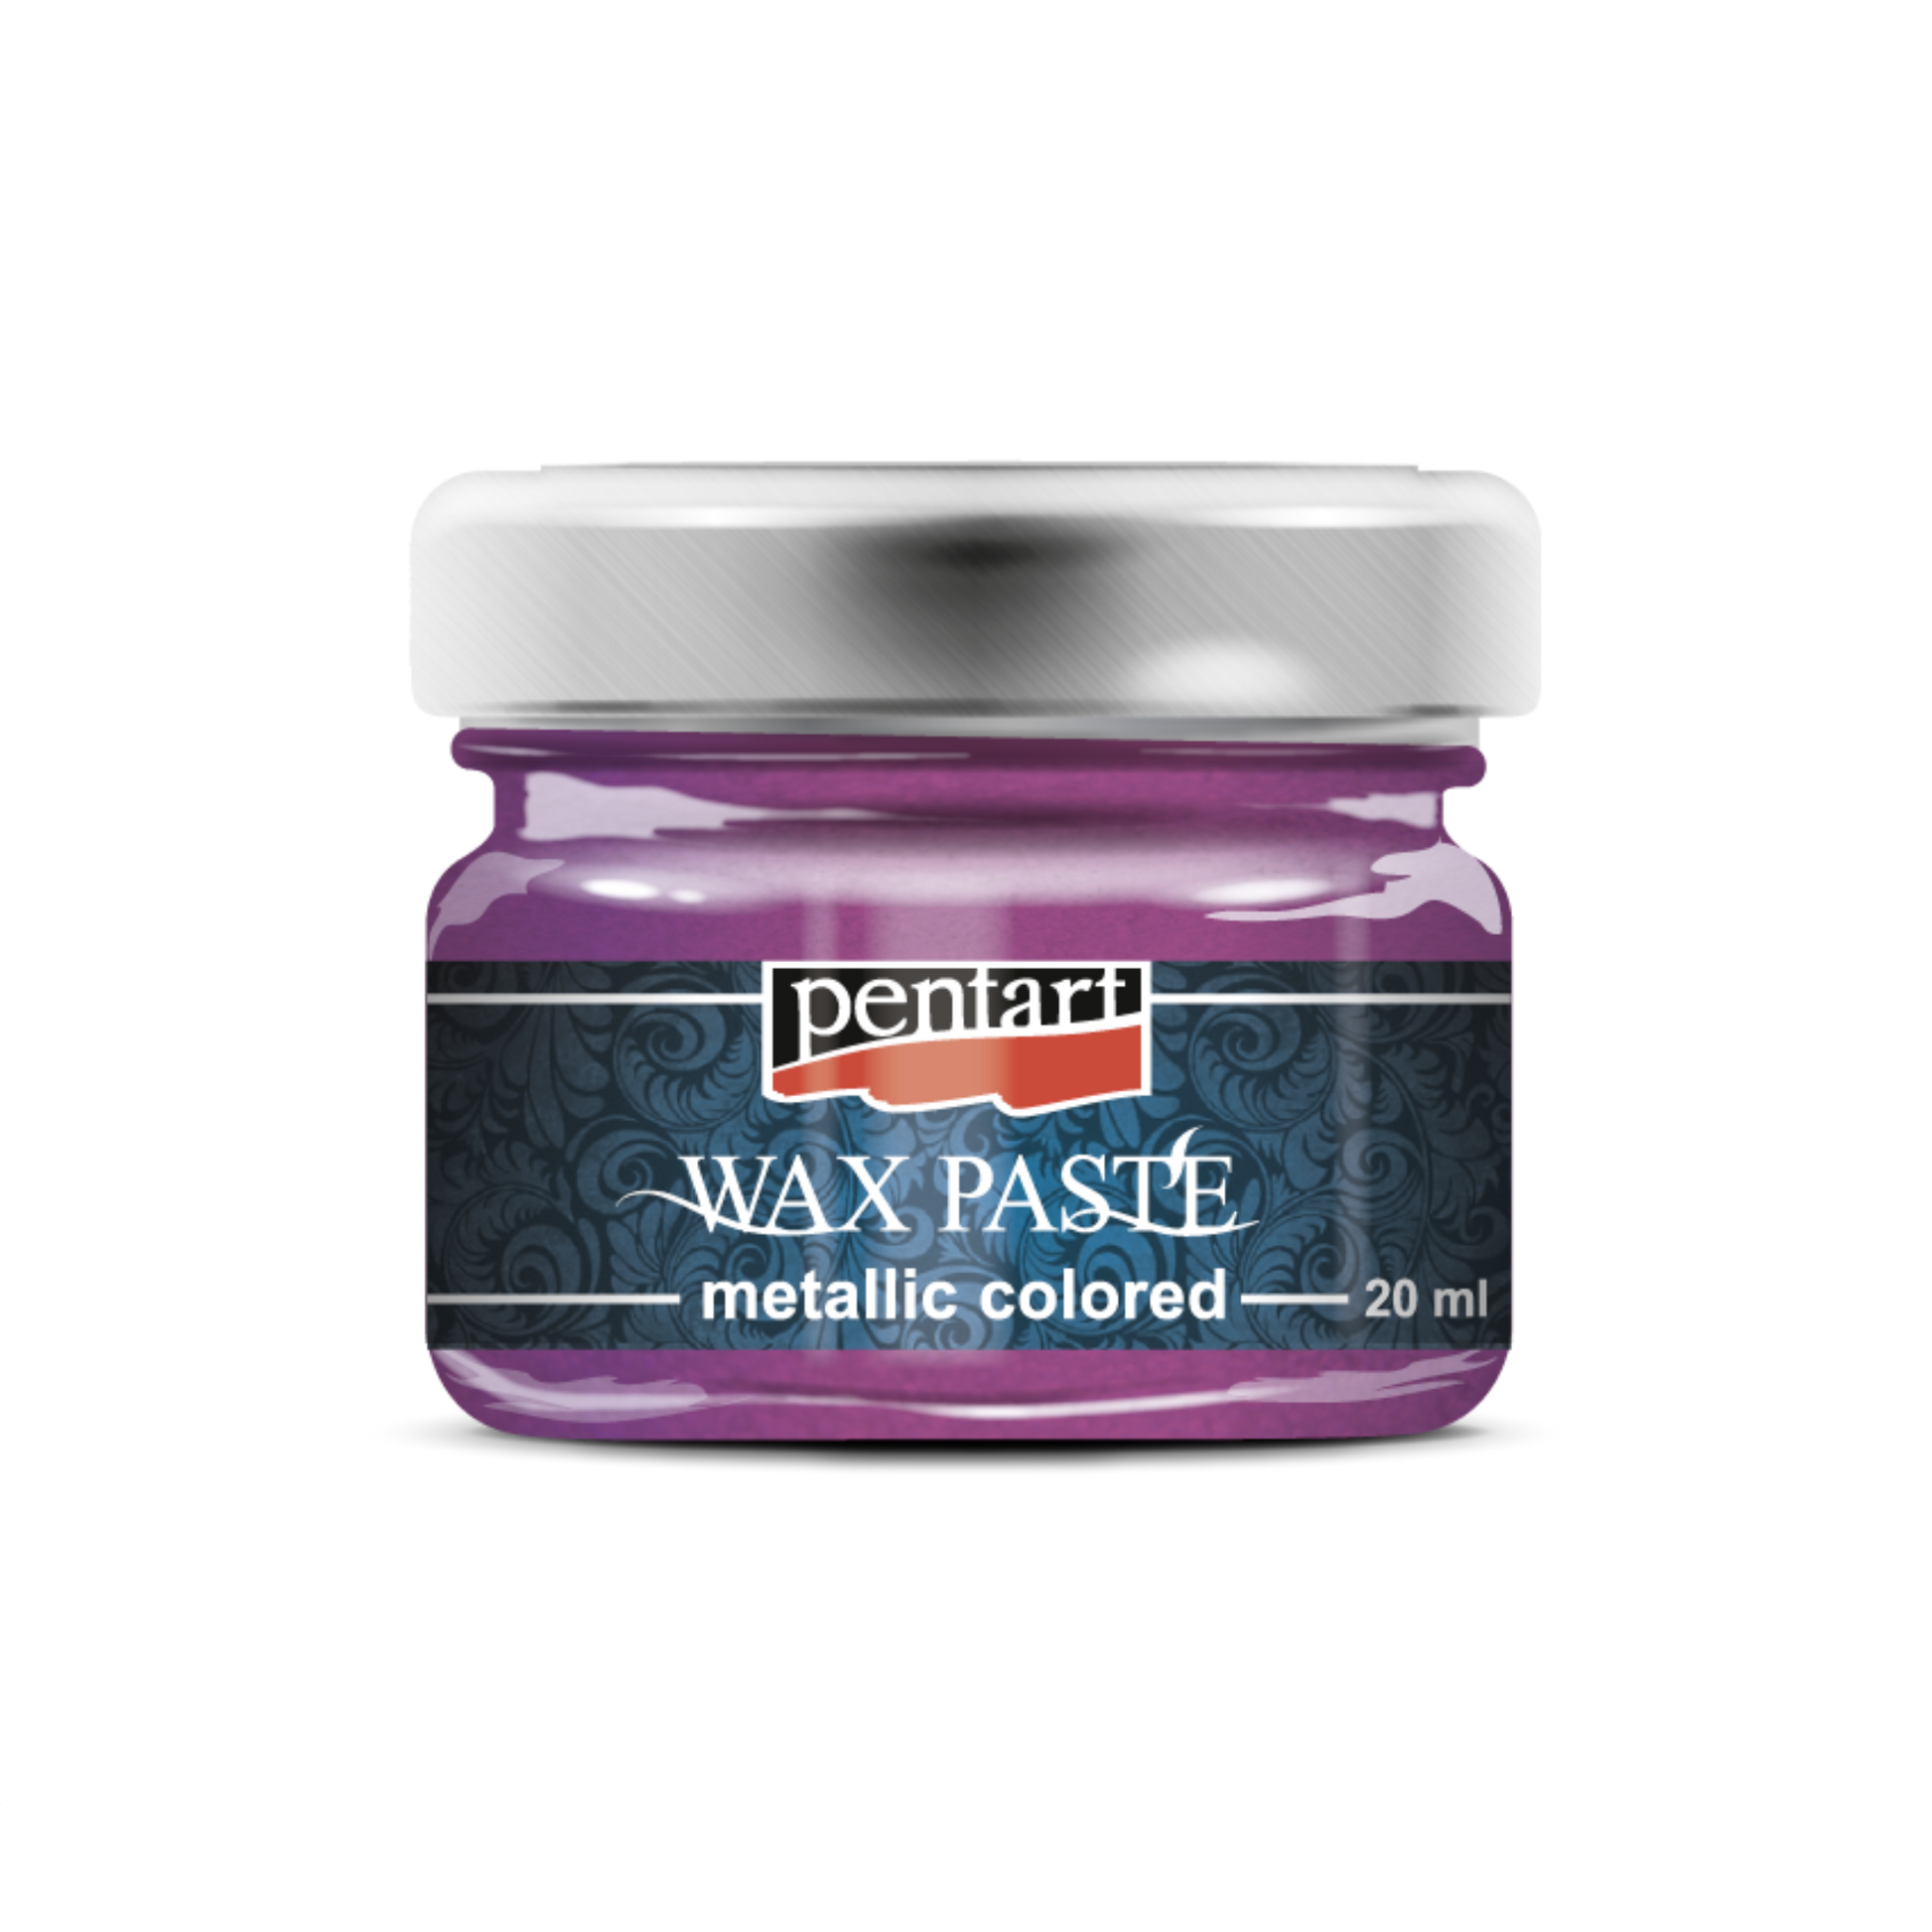 Wax Paste "Metallic Magenta" by Pentart available at Milton's Daughter